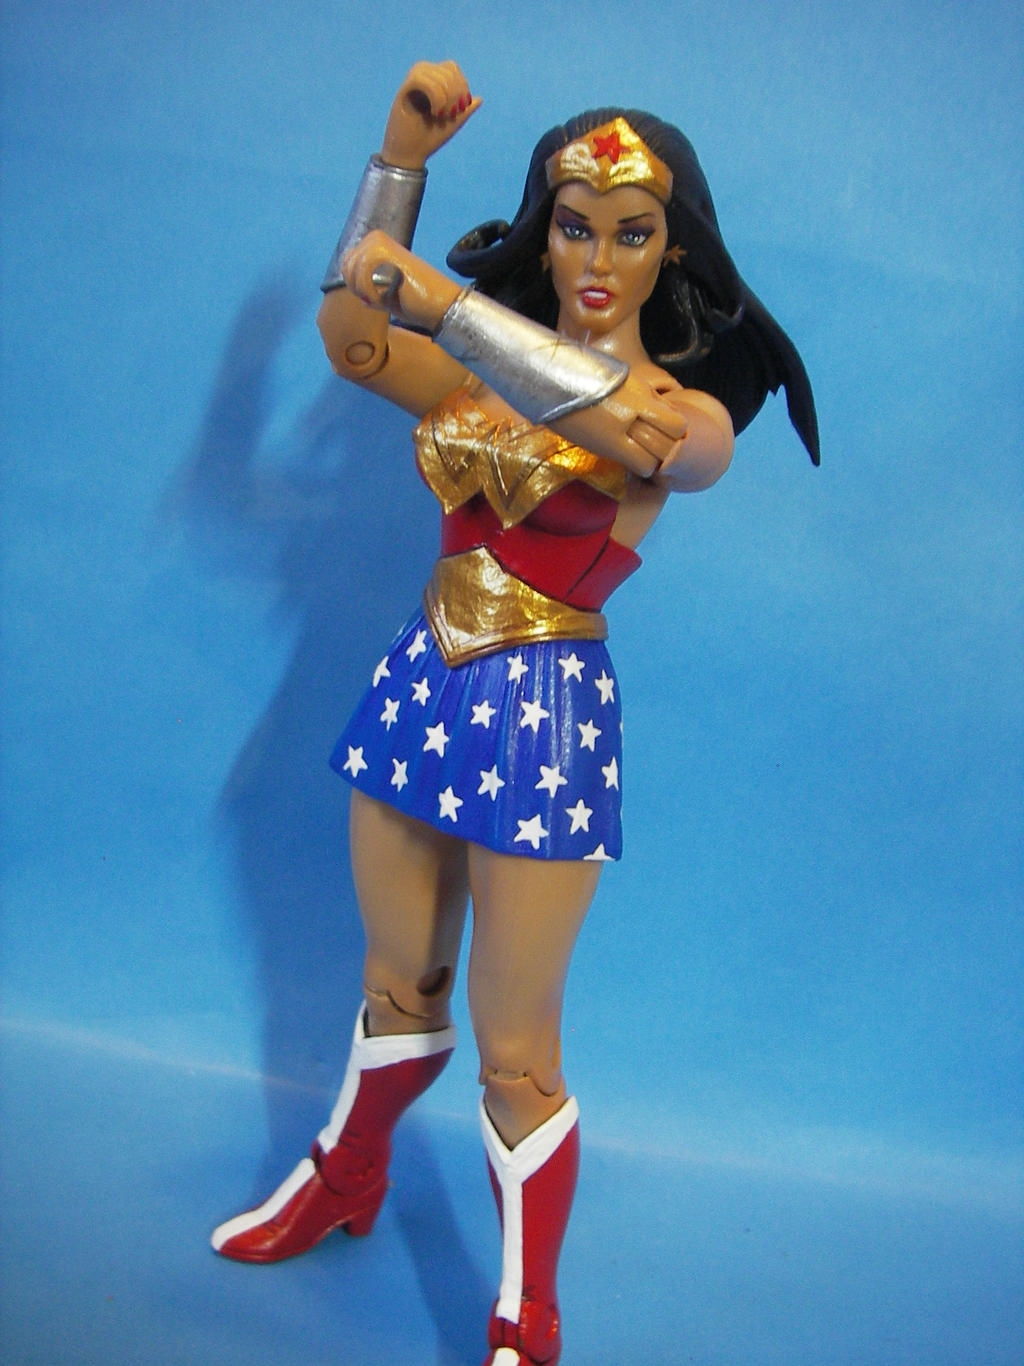 Custom She-Ra Wonder Woman figure